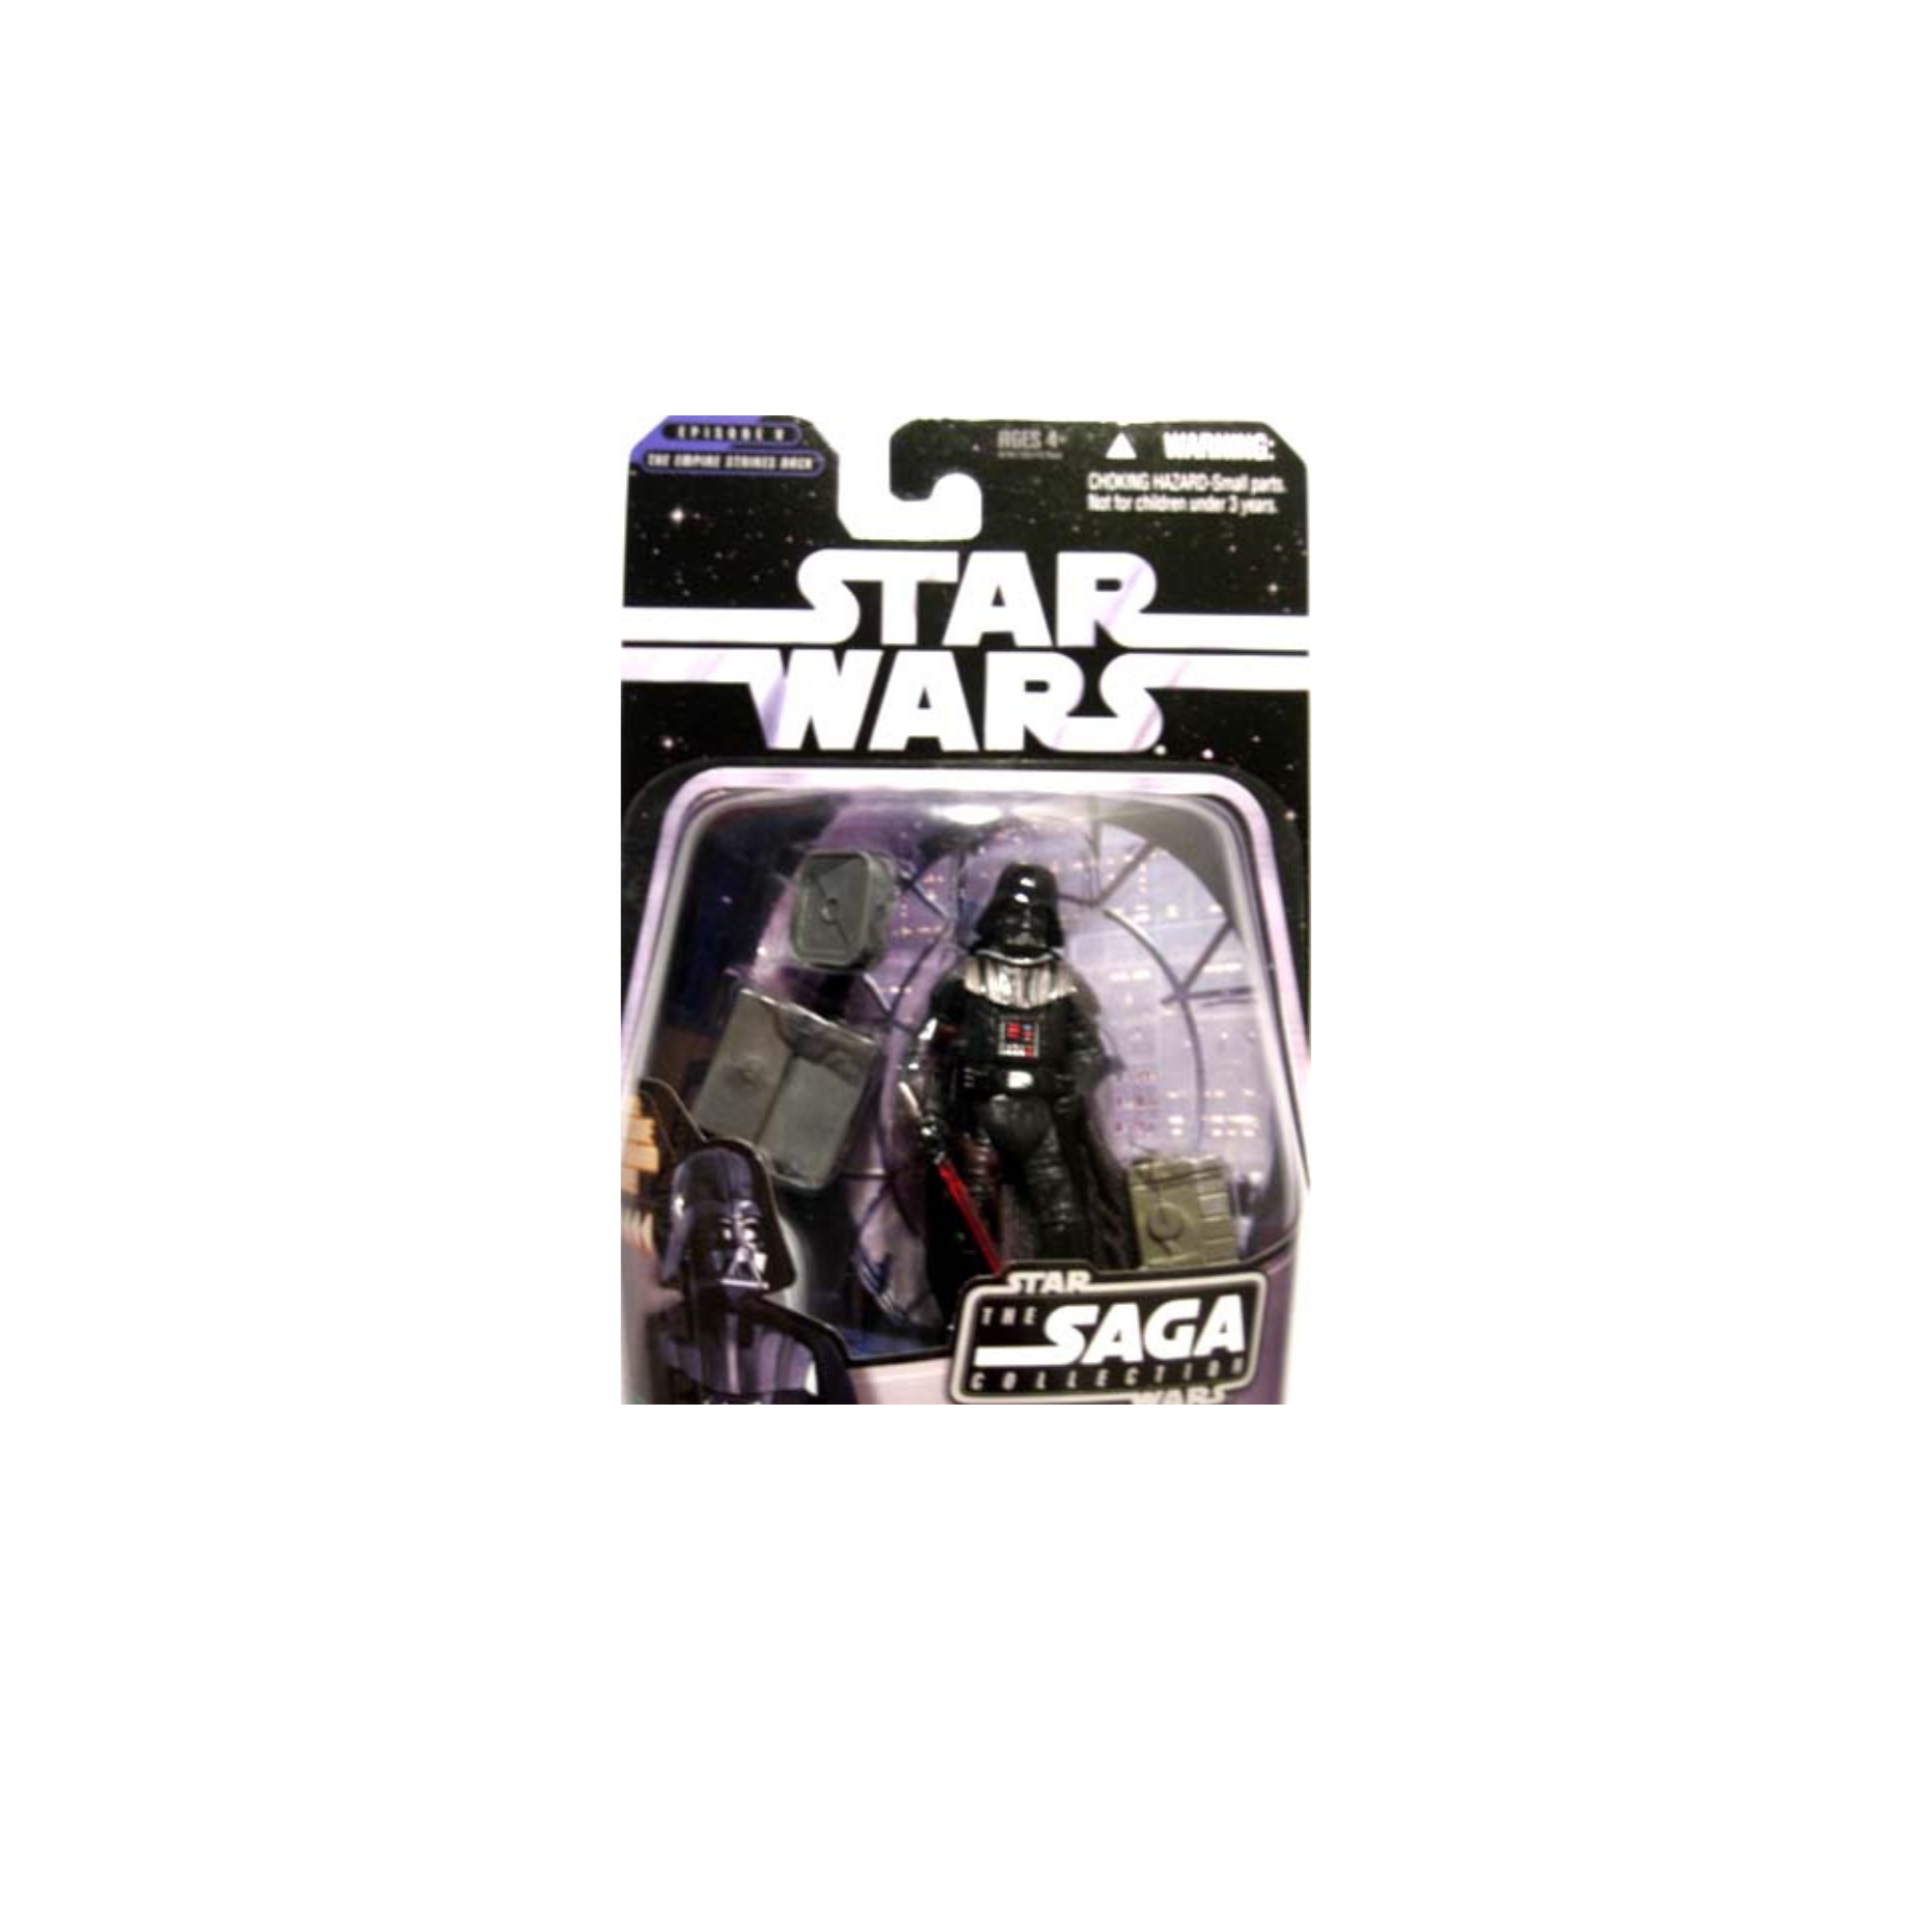 Star Wars Darth Vader SAGA 2006